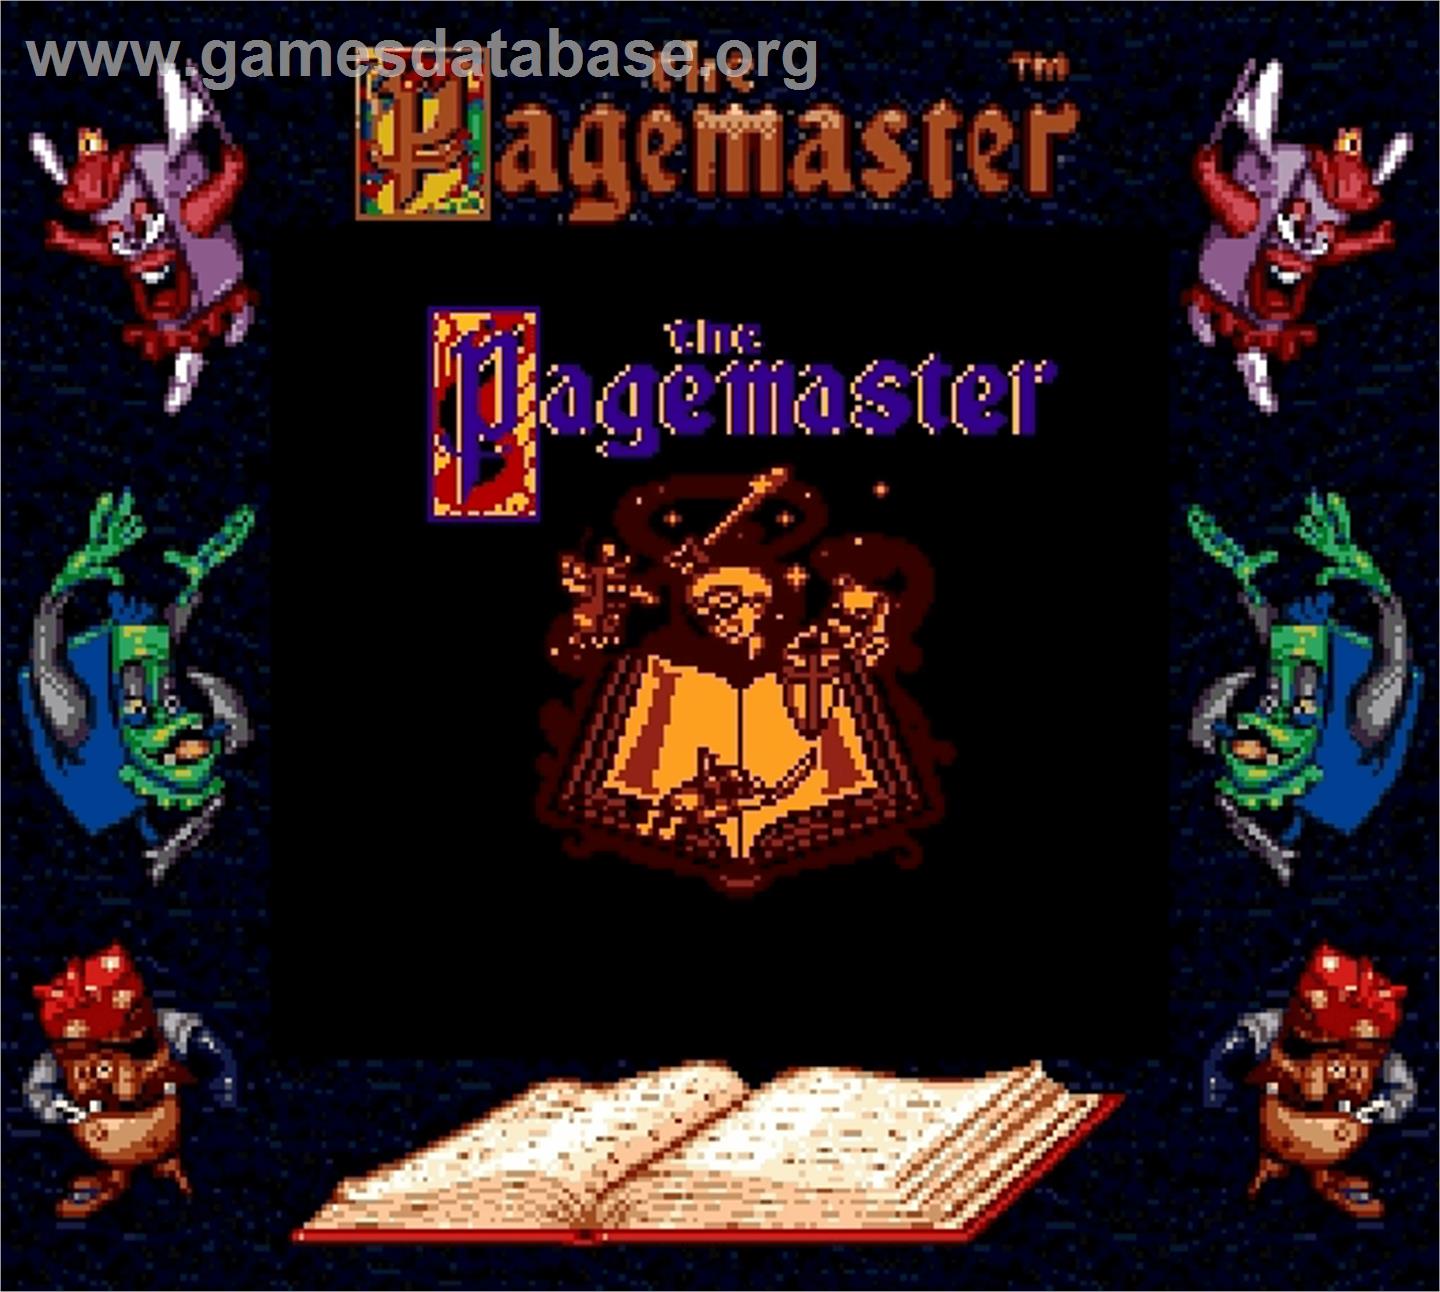 Pagemaster, The - Nintendo Super Gameboy - Artwork - Title Screen